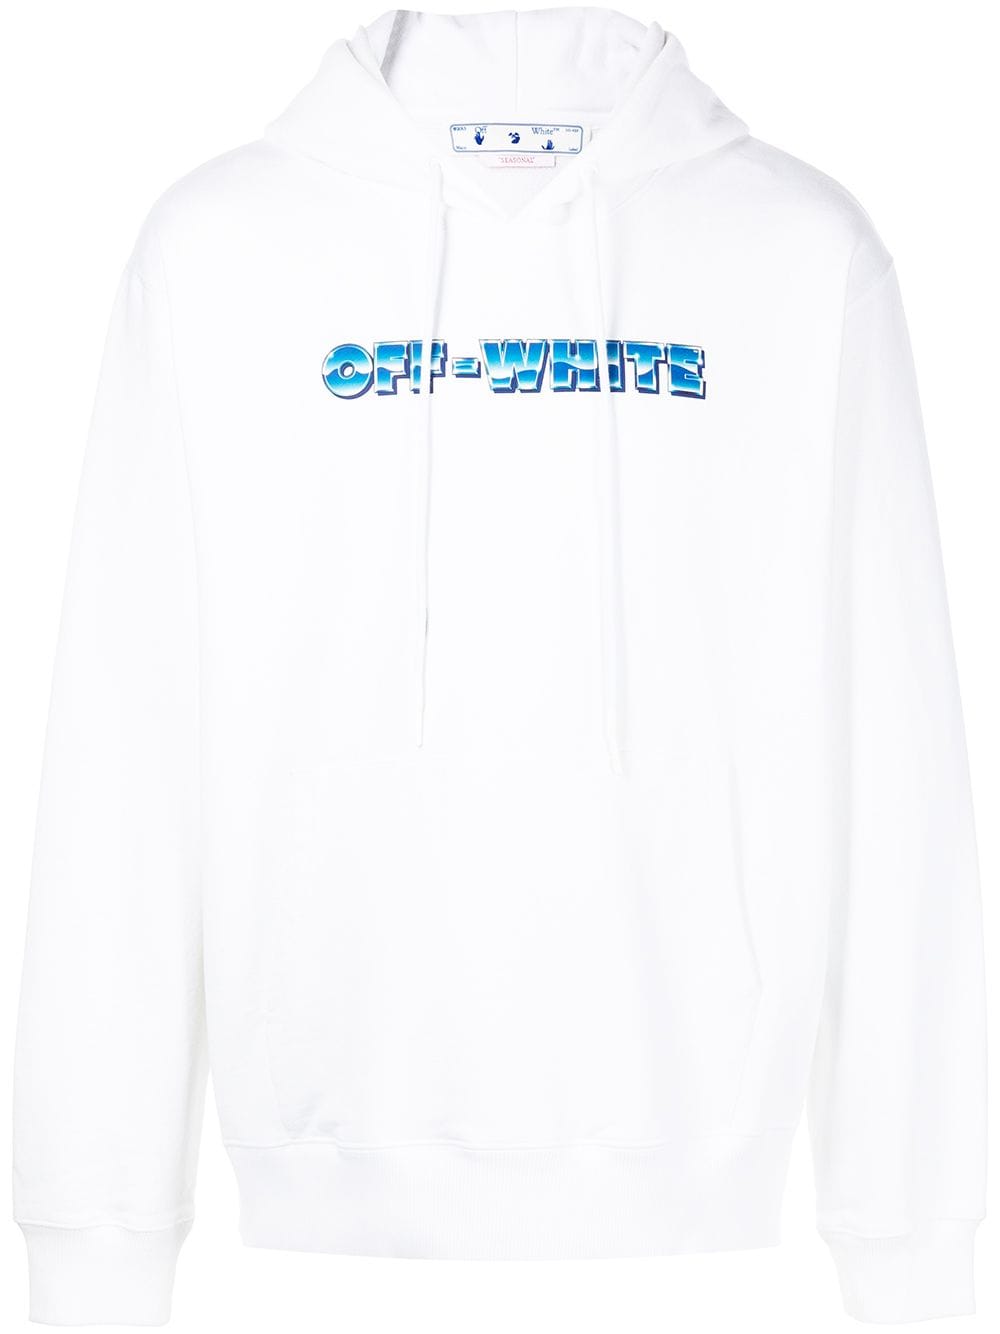 Off-White logo-print cotton hoodie